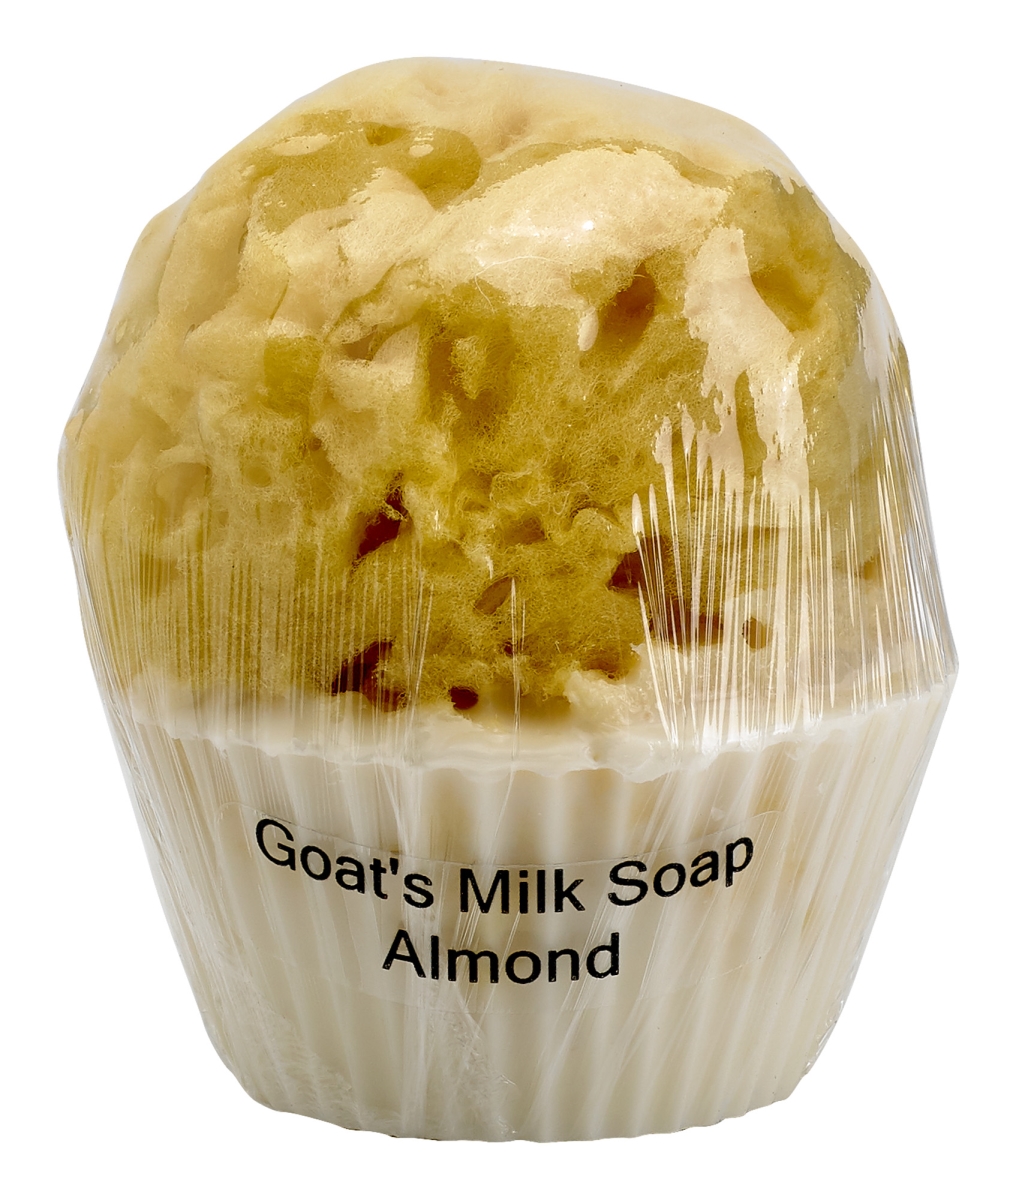 Goats Milk TS-01 Cupcake soap with sponge - Almond, 3 oz -  Gracian, GR134790